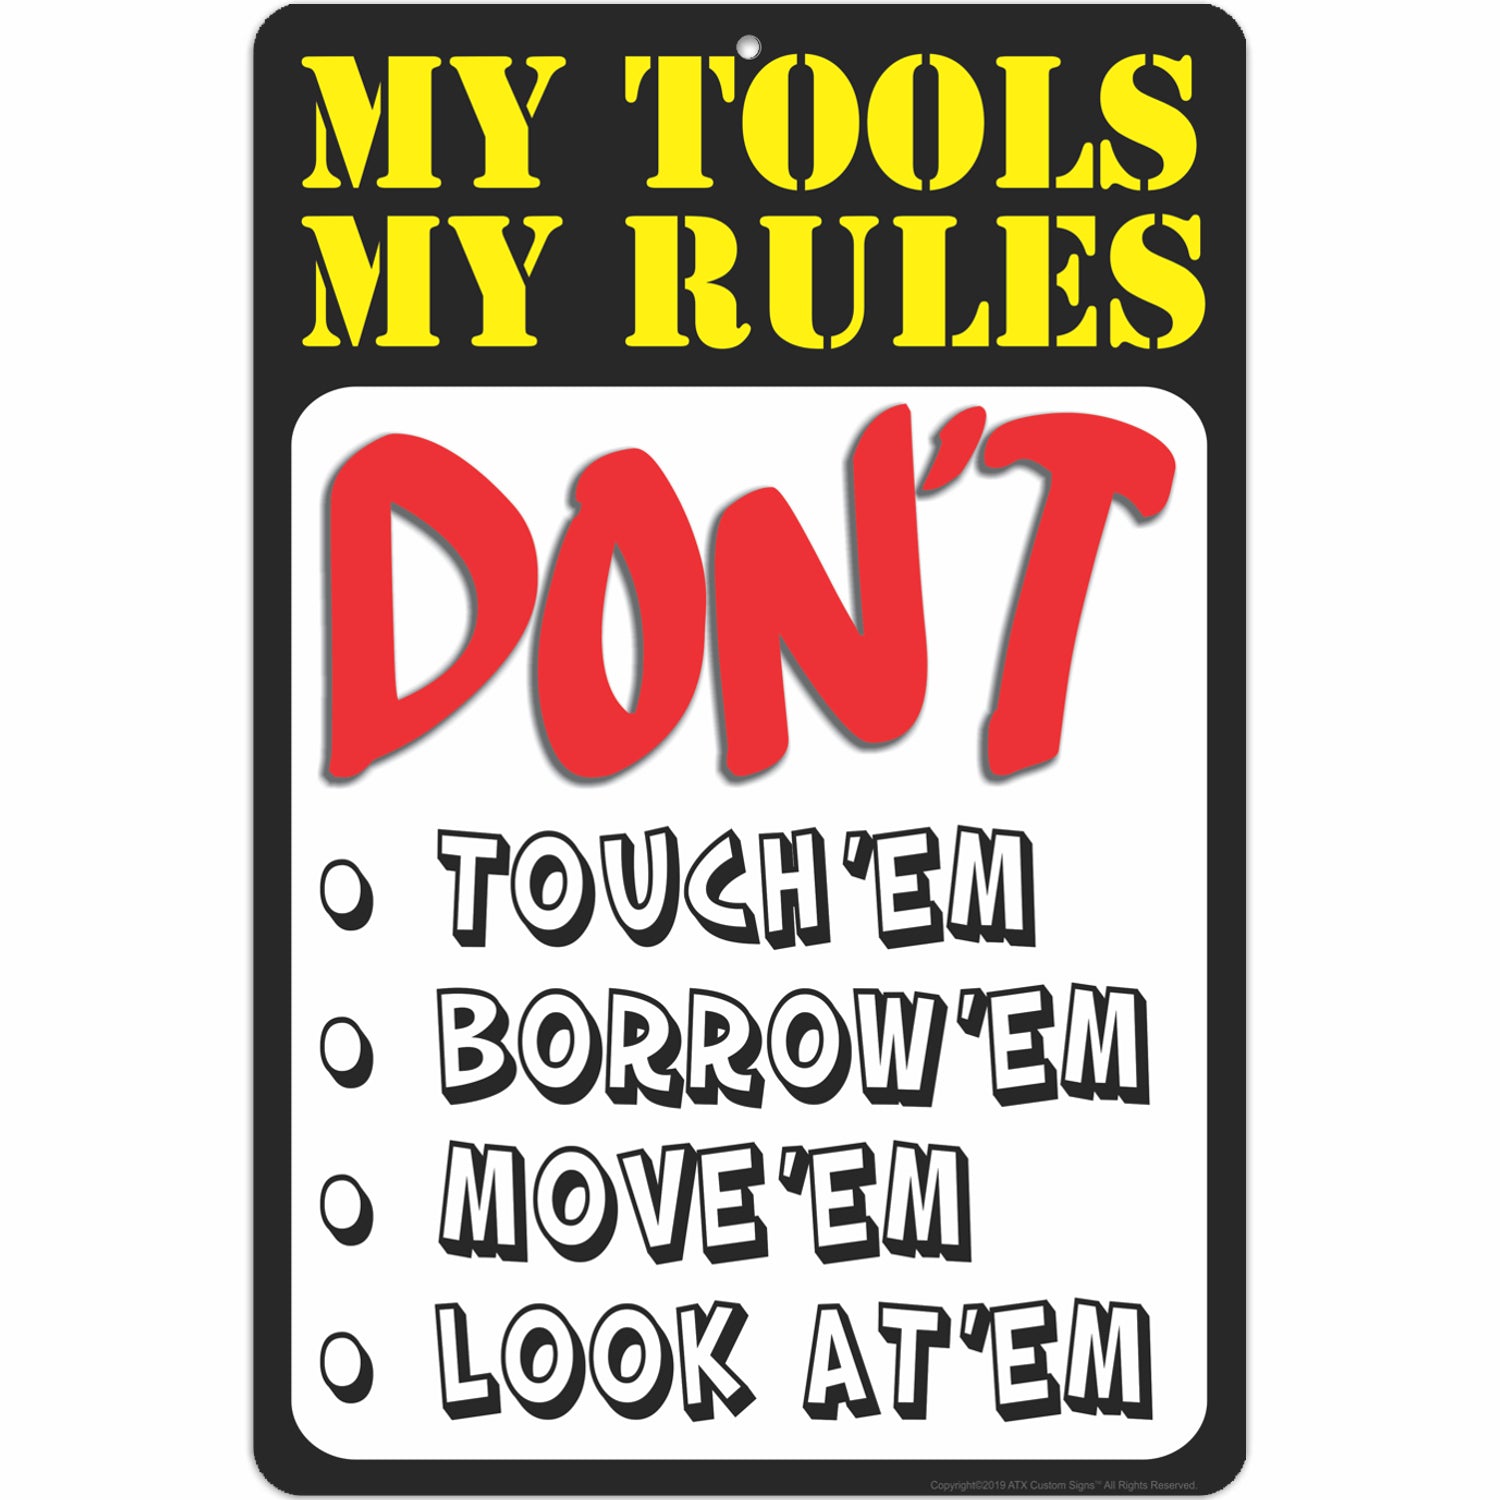 My Tools My Rules Don't Touch'em, Borrow'em, Move'em, Look at'em